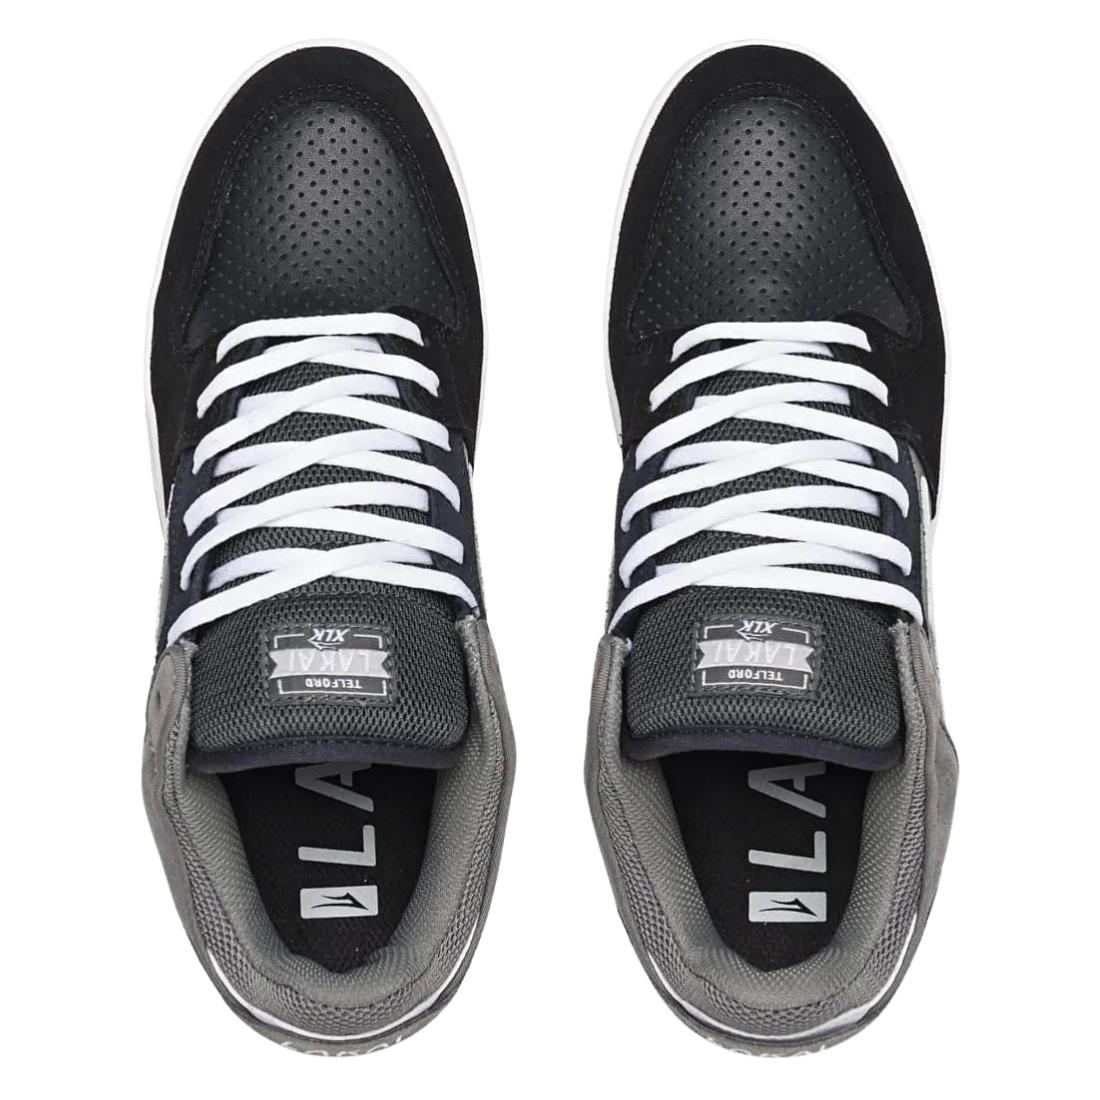 Lakai Telford Low Skate Shoes - Black Gradient Suede